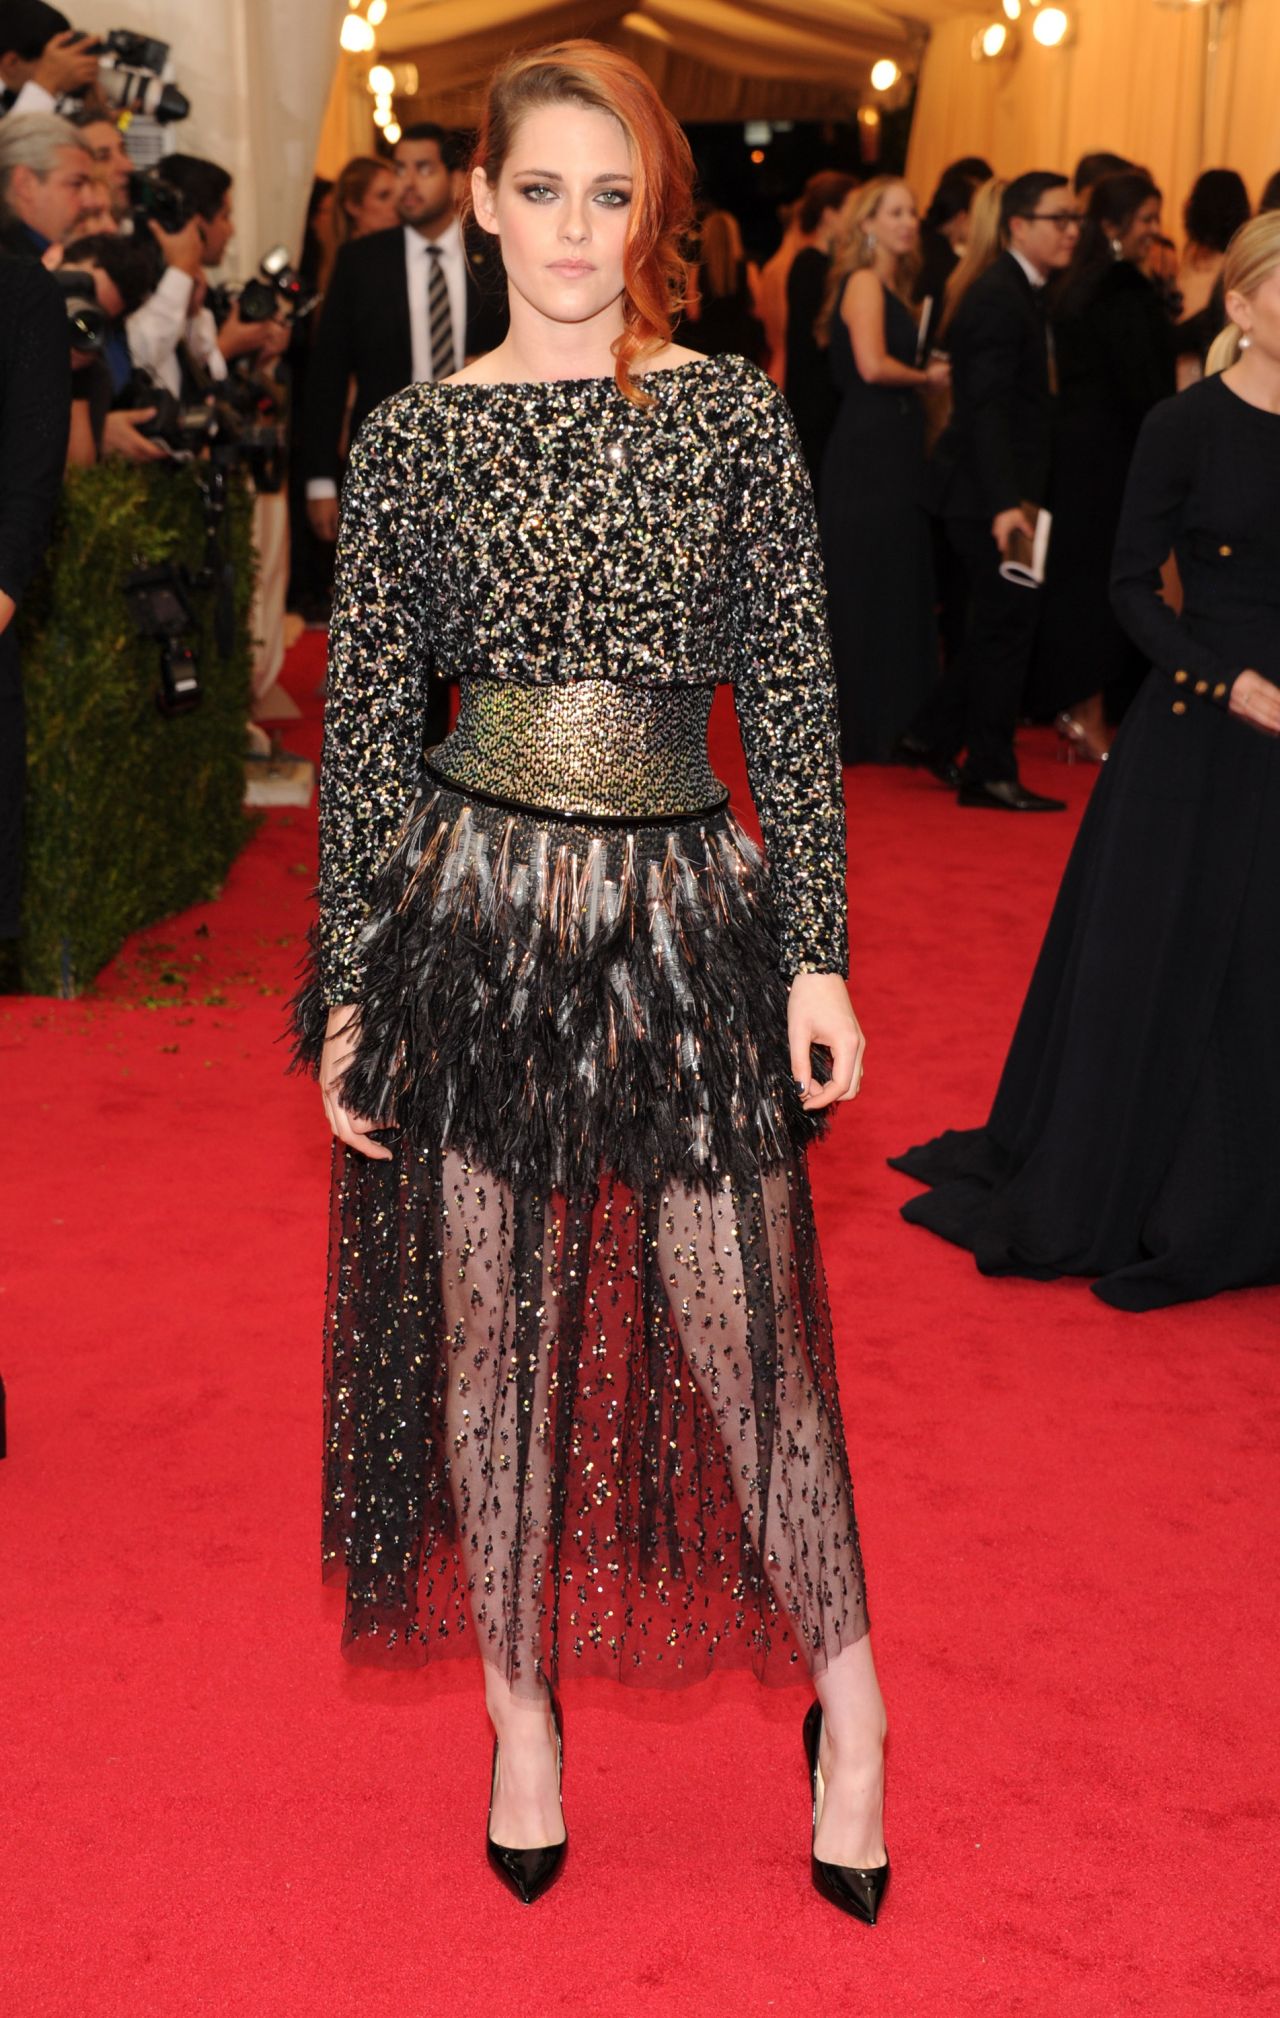 Kristen Stewart in Chanel 2014 Couture Dress – 2014 Met Costume